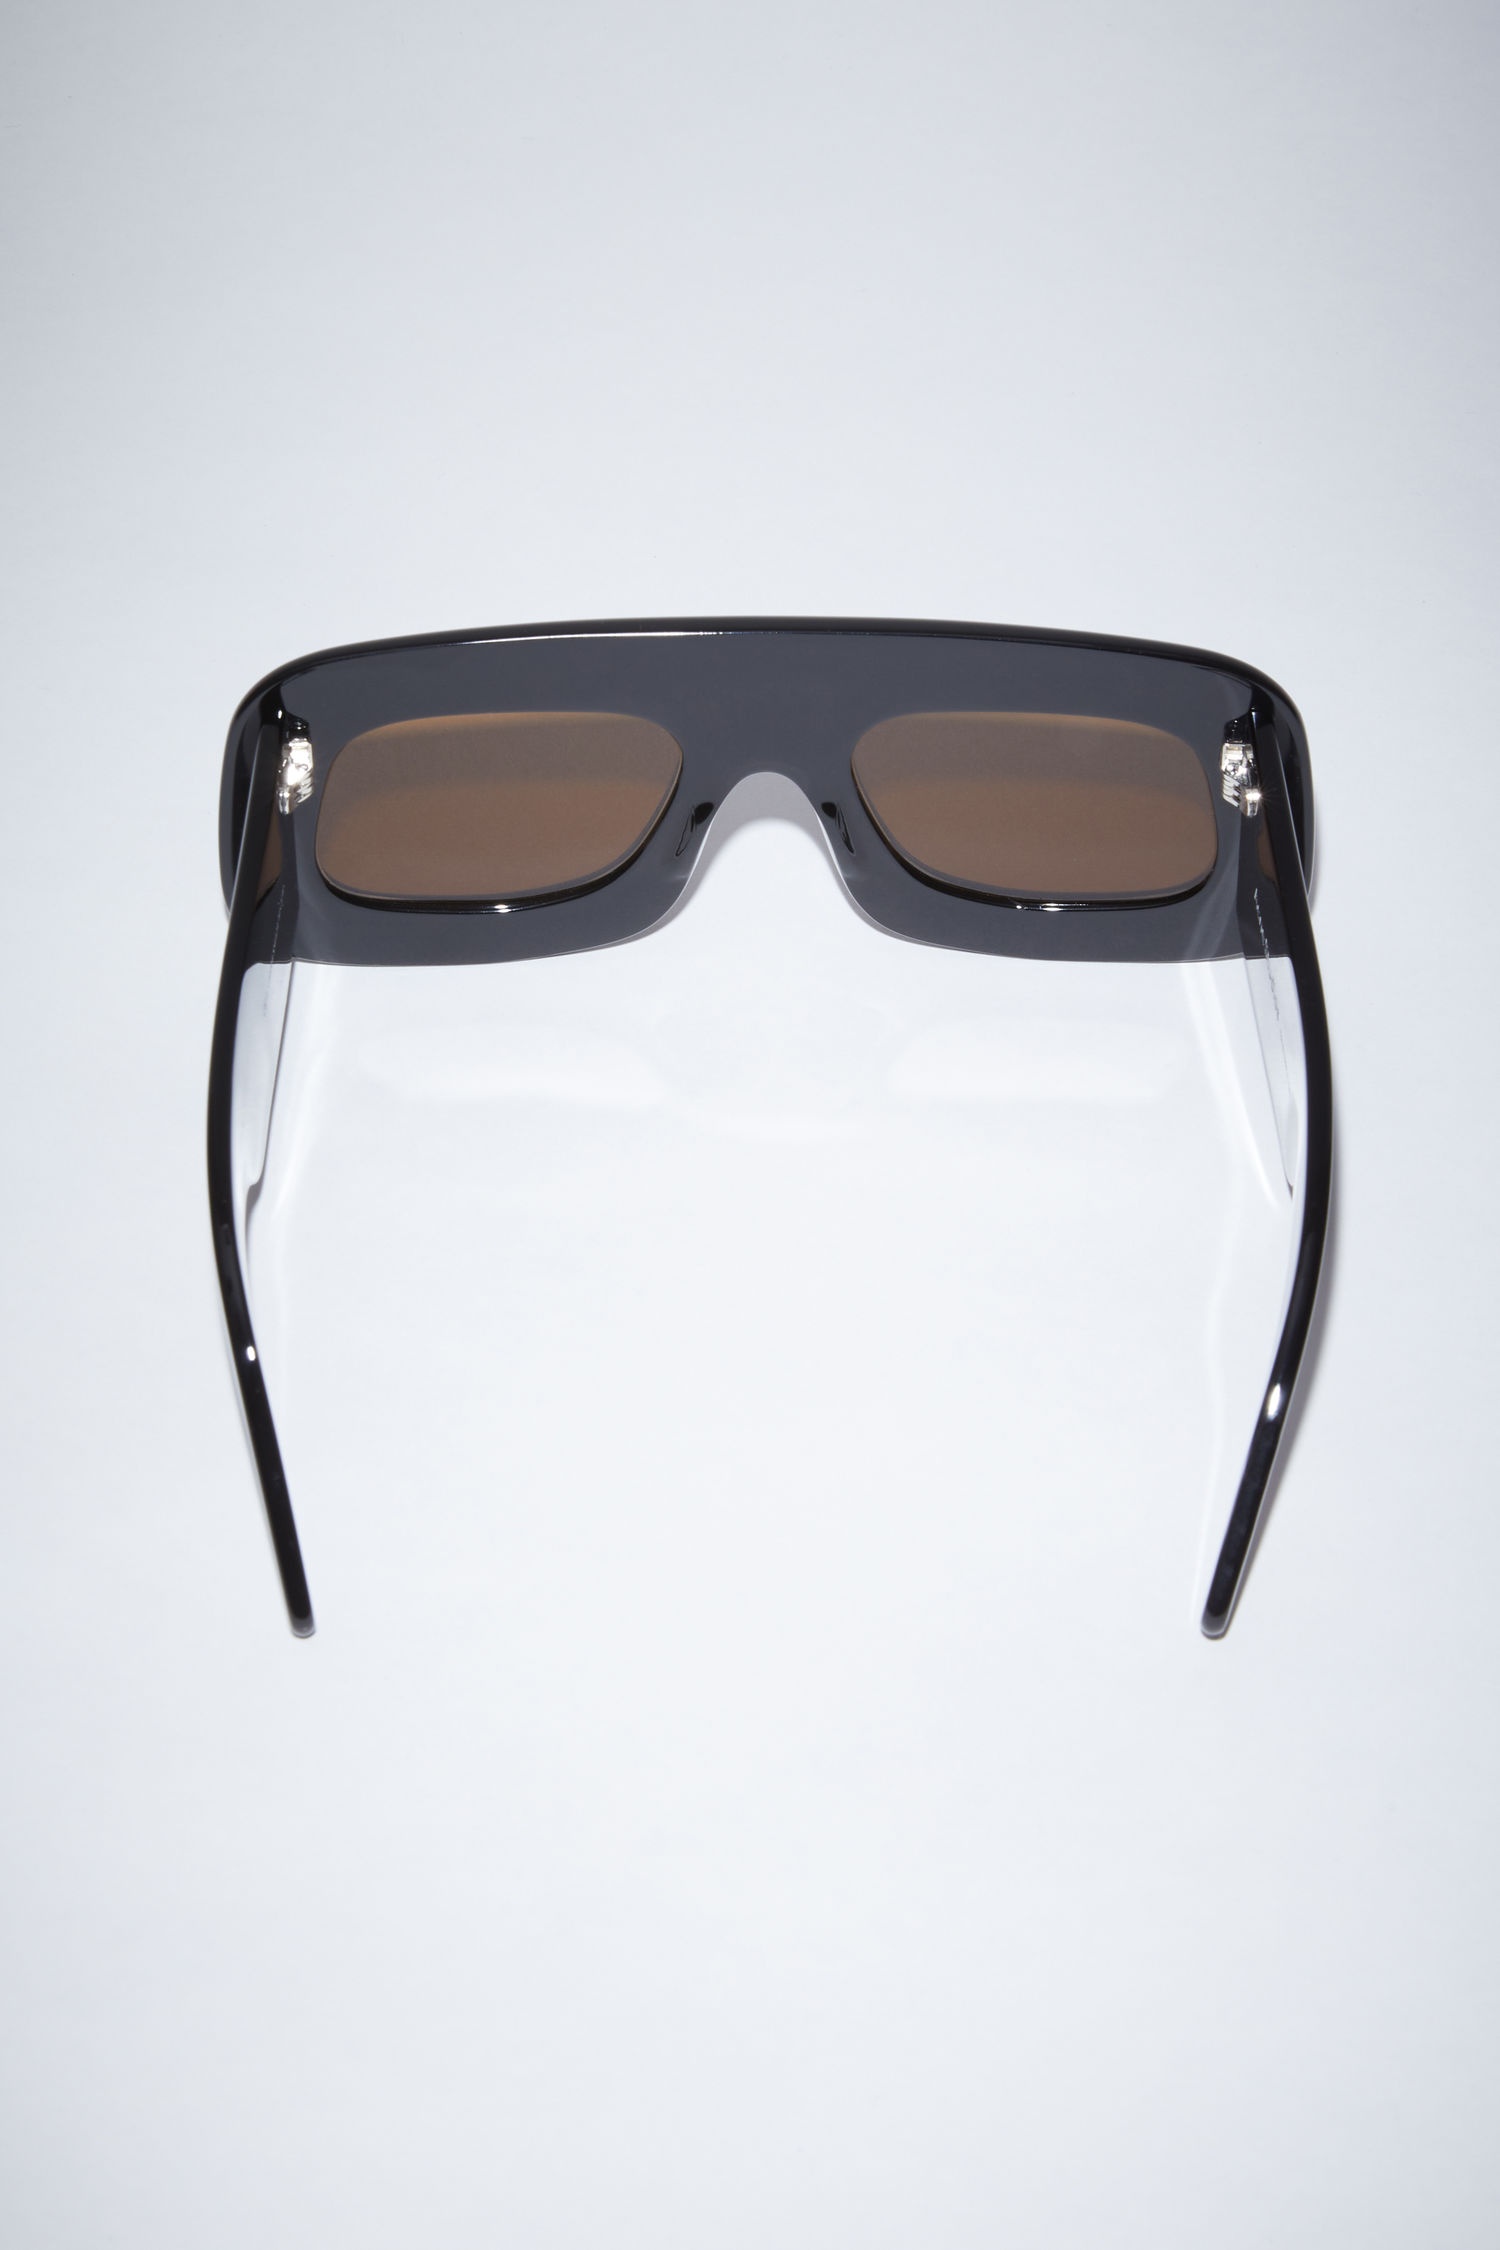 ACNE STUDIOS Auggi D-Frame Stainless Steel Wrap-Around Sunglasses for Men